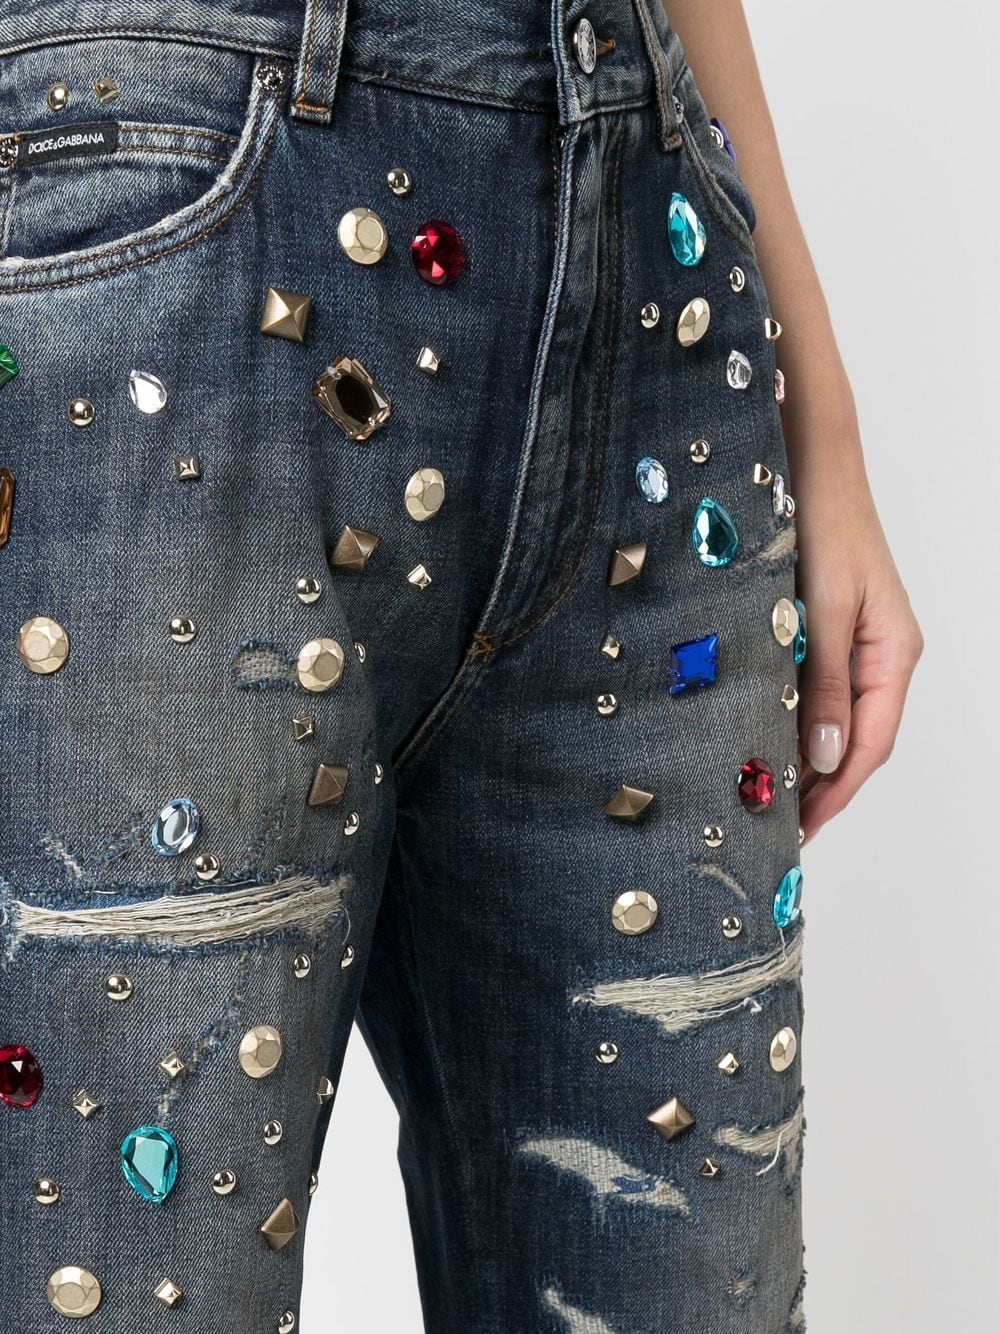 Dolce & Gabbana Distressed Embellished Jeans - Farfetch